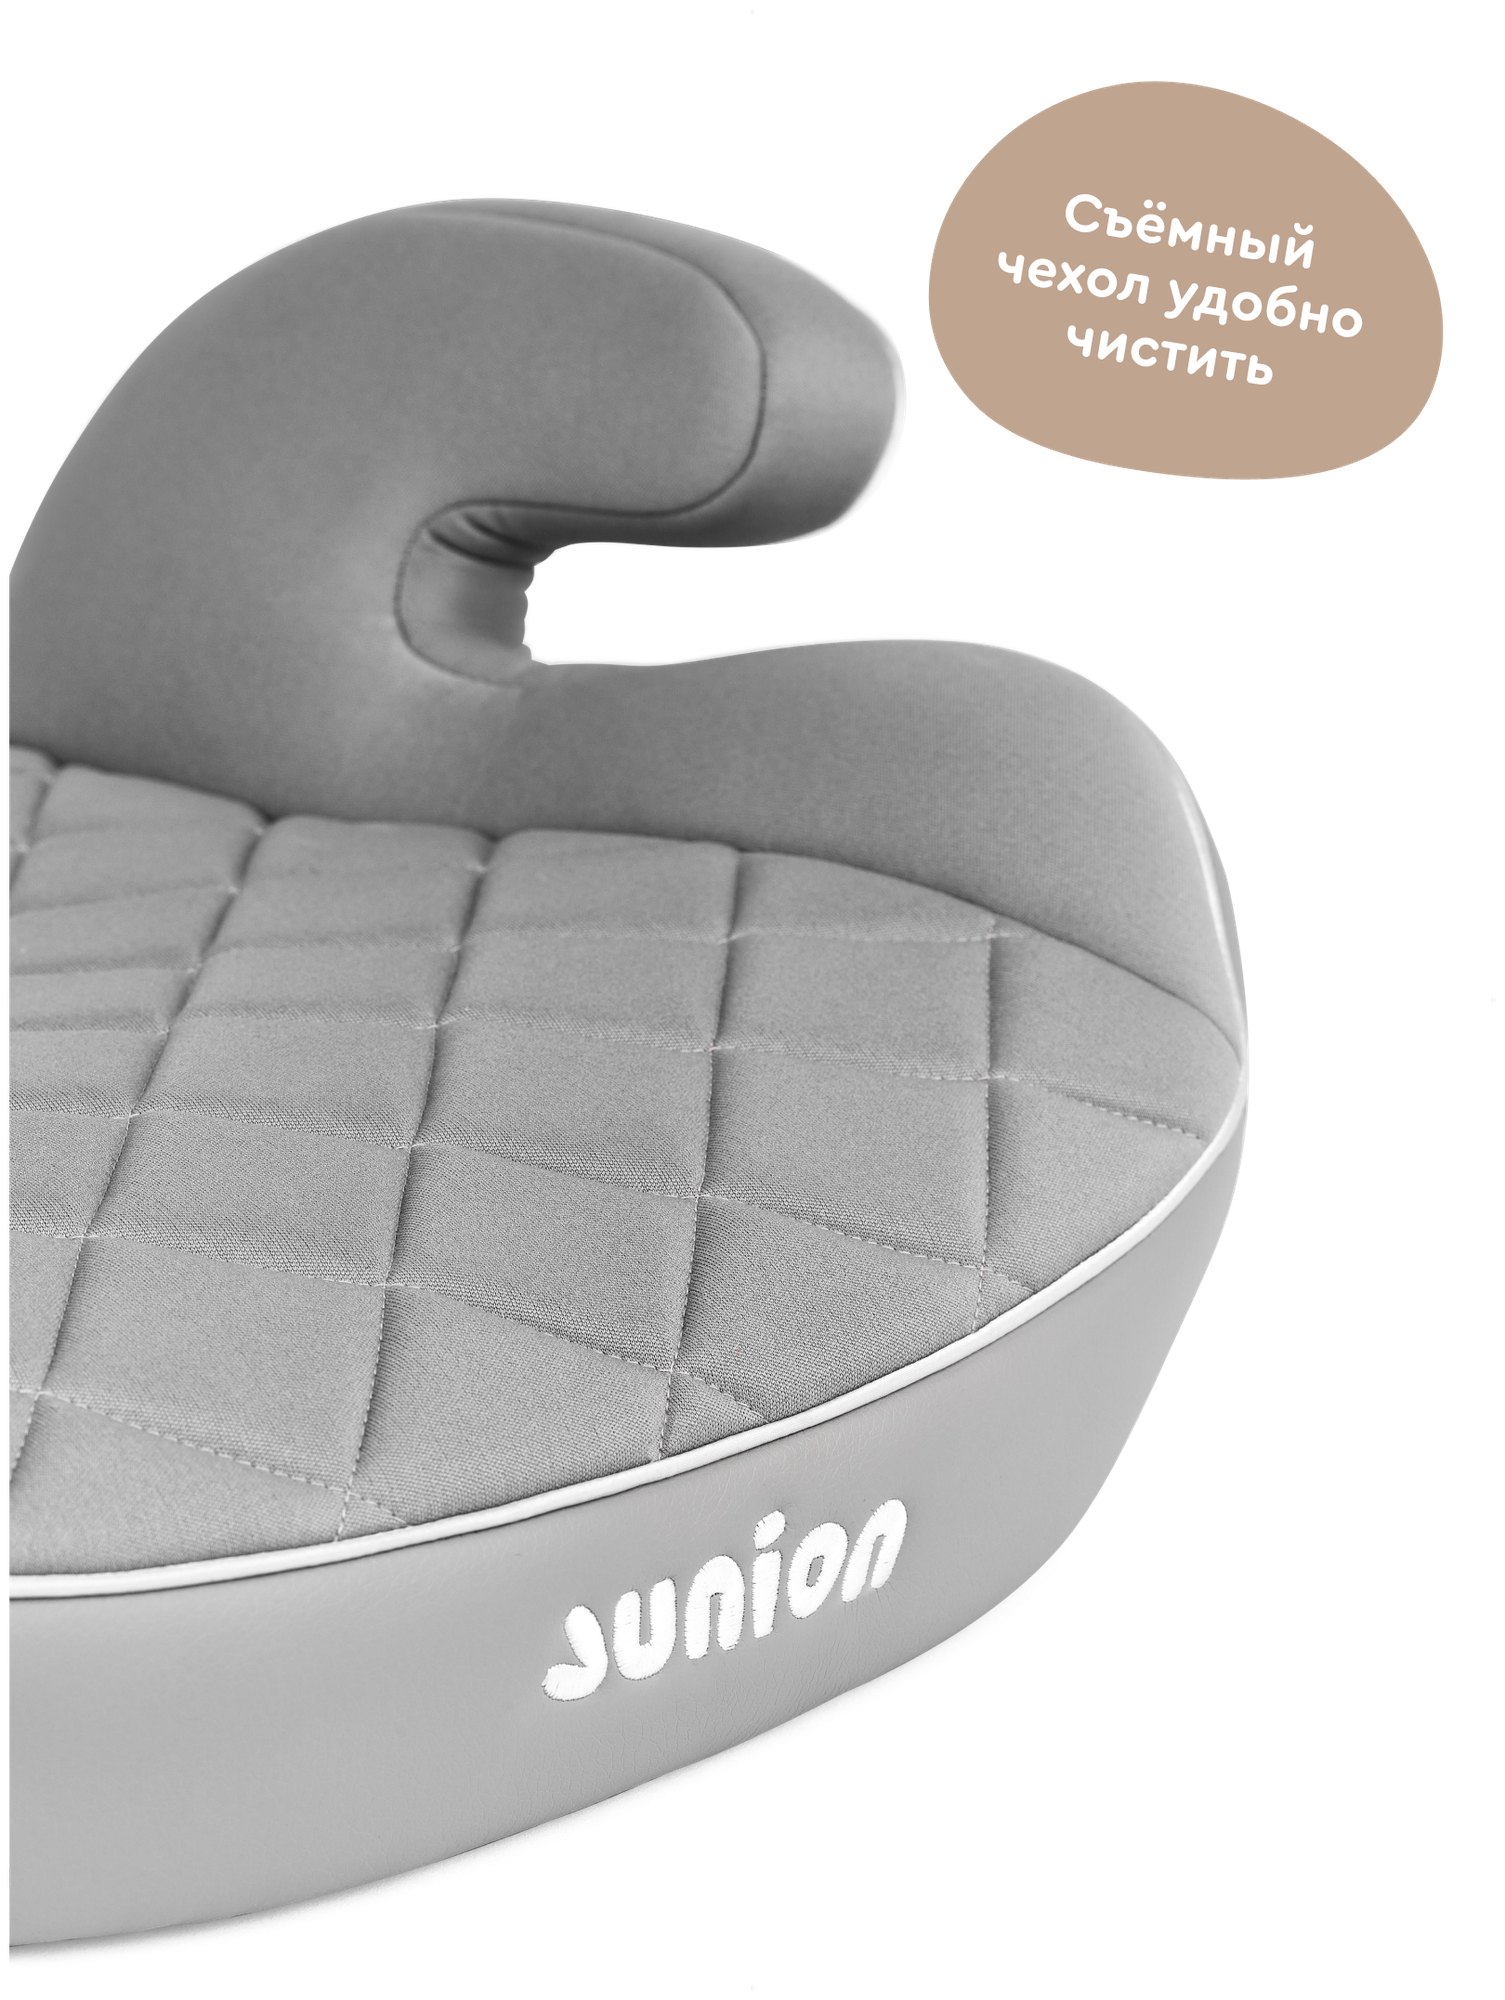 Автокресло/бустер JUNION Vardi группа 3 (22-36 кг), Isofix, серый